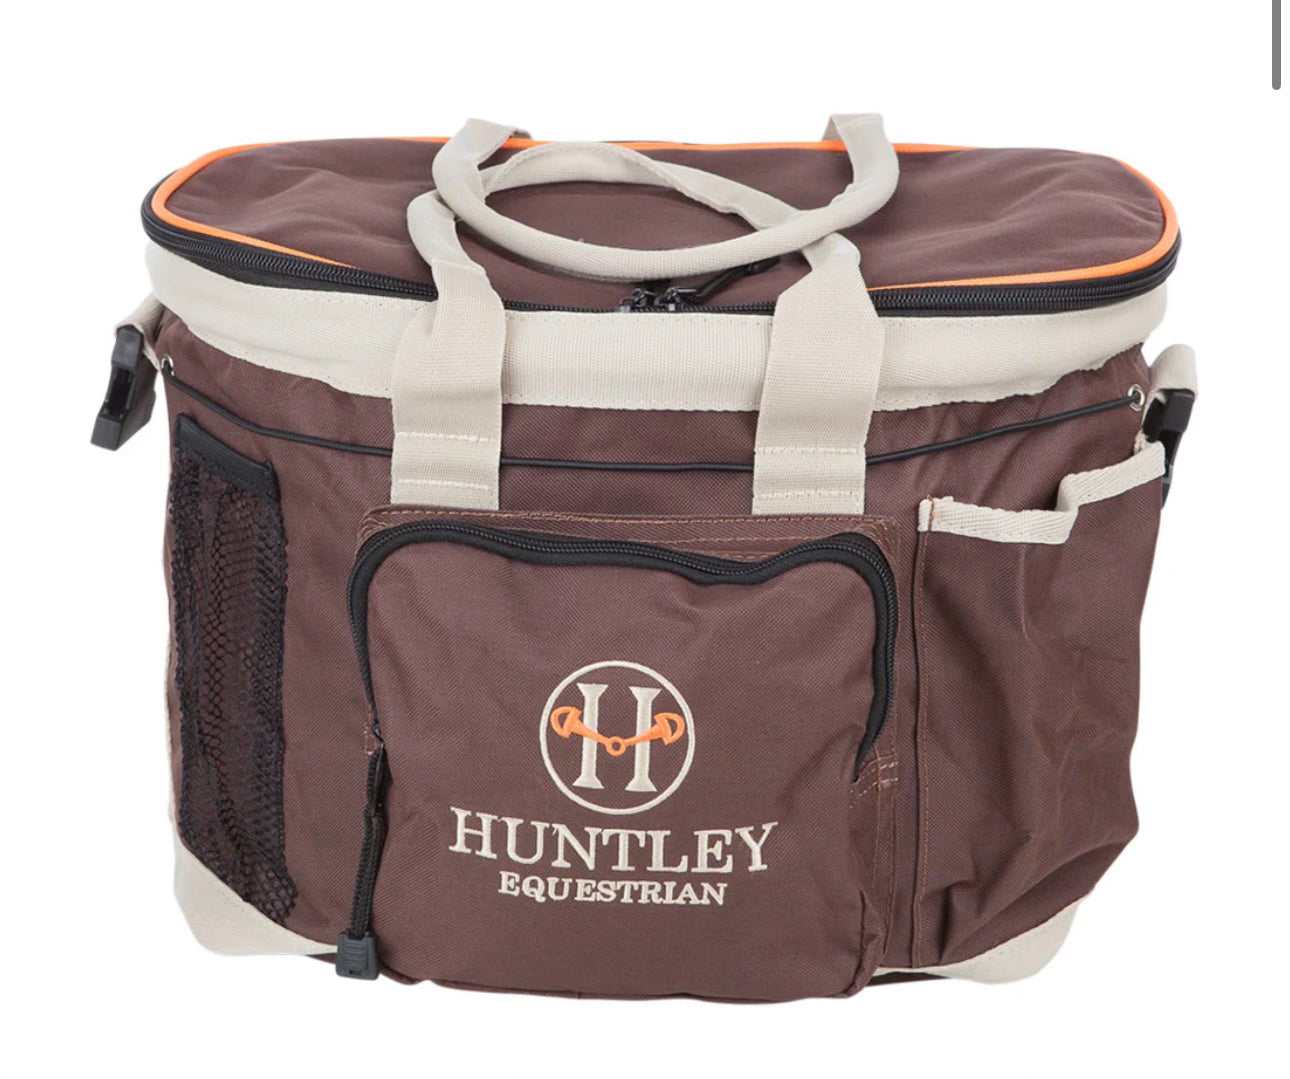 Huntley Equestrian Deluxe Grooming Bag